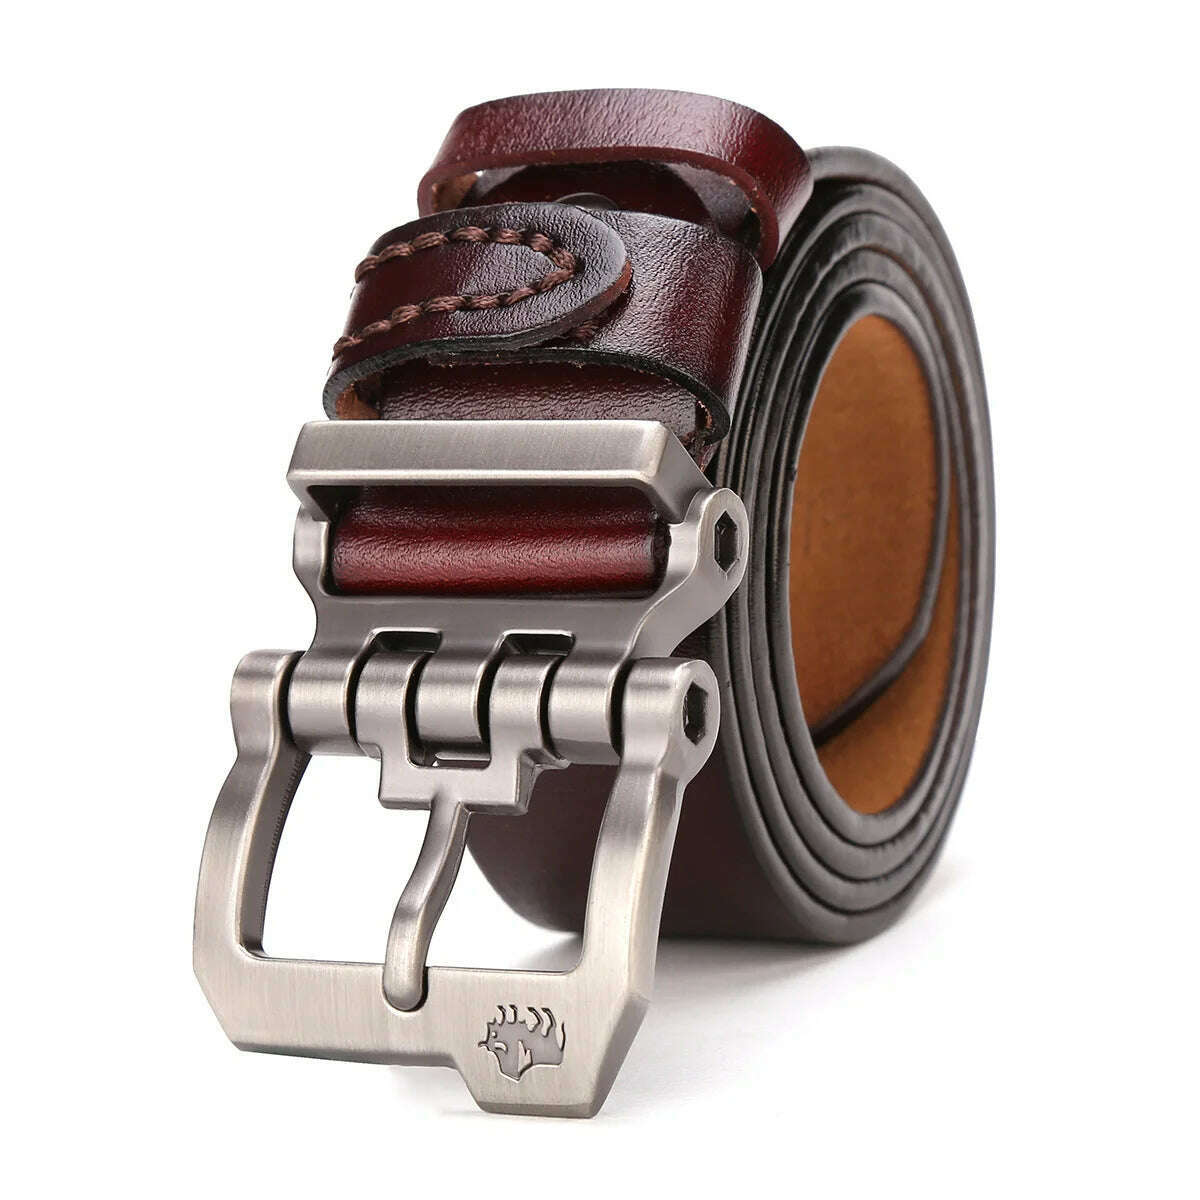 KIMLUD, BISON DENIM Men Belts Vintage Pin Buckle Belt Casual Genuine Leather High Quality Belts For Men Business Leather Strap for Jeans, KIMLUD Women's Clothes